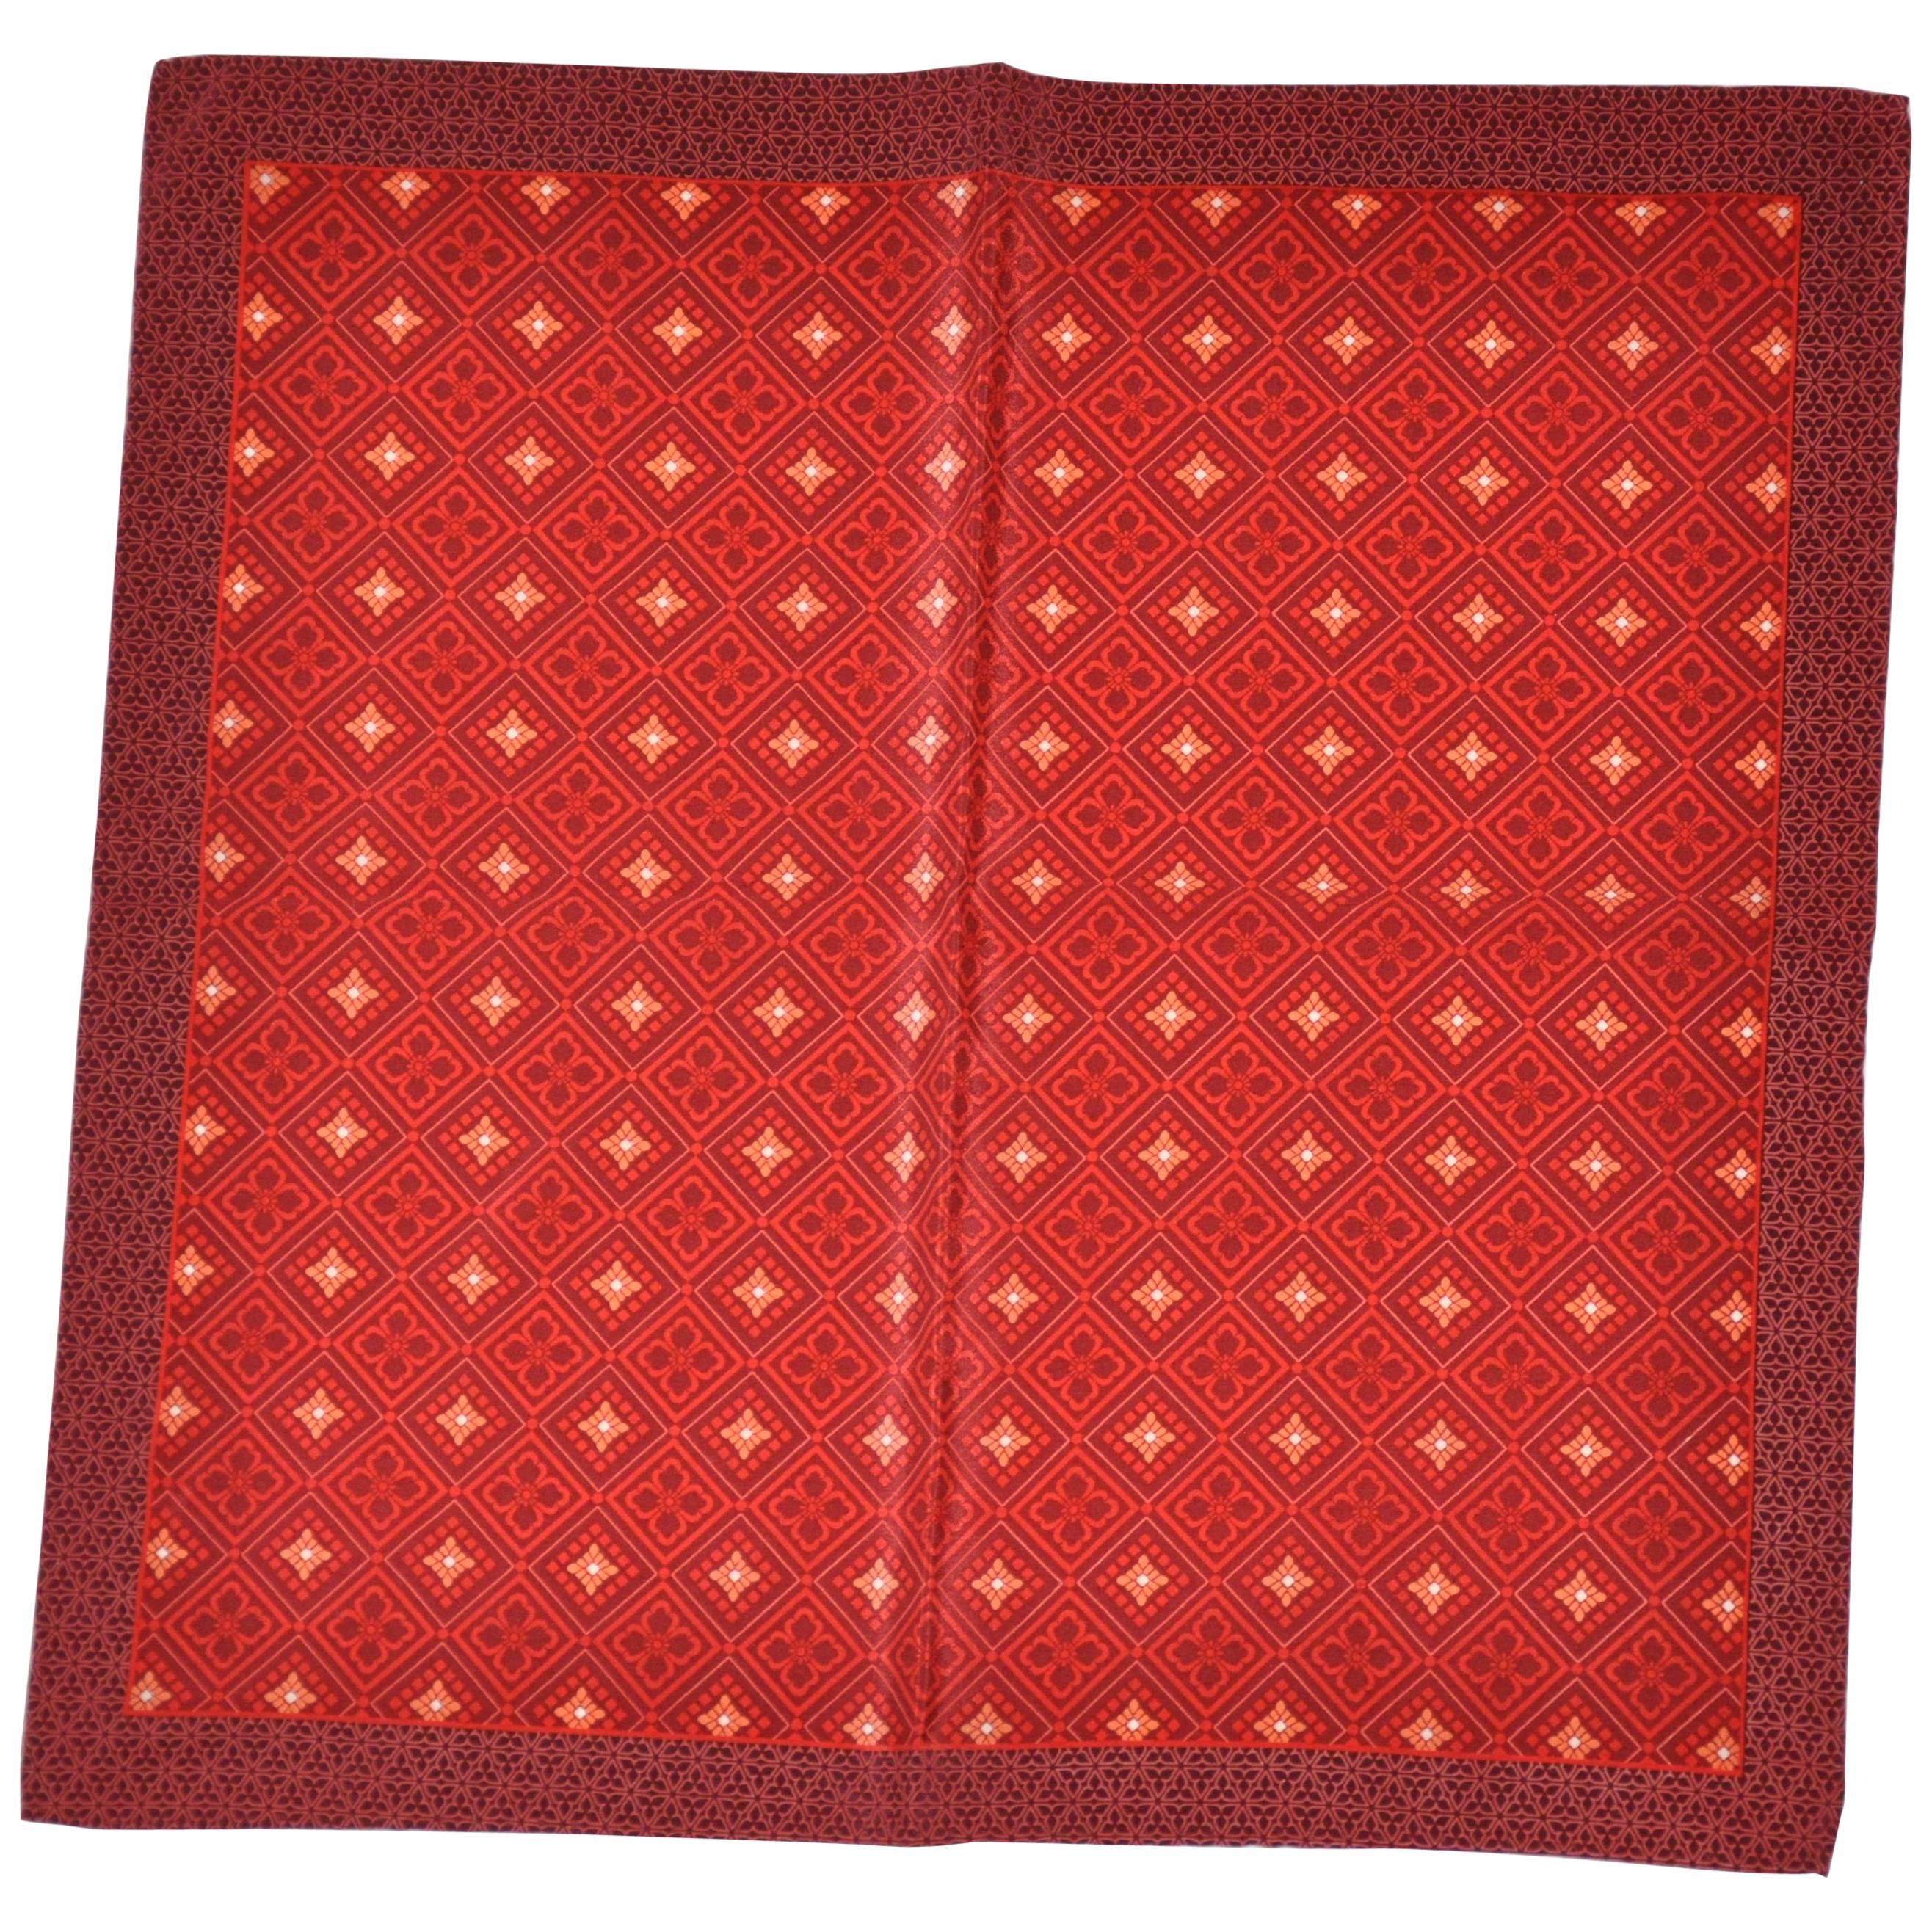 Burgundy with Multiple Reds Center Silk Handkerchief